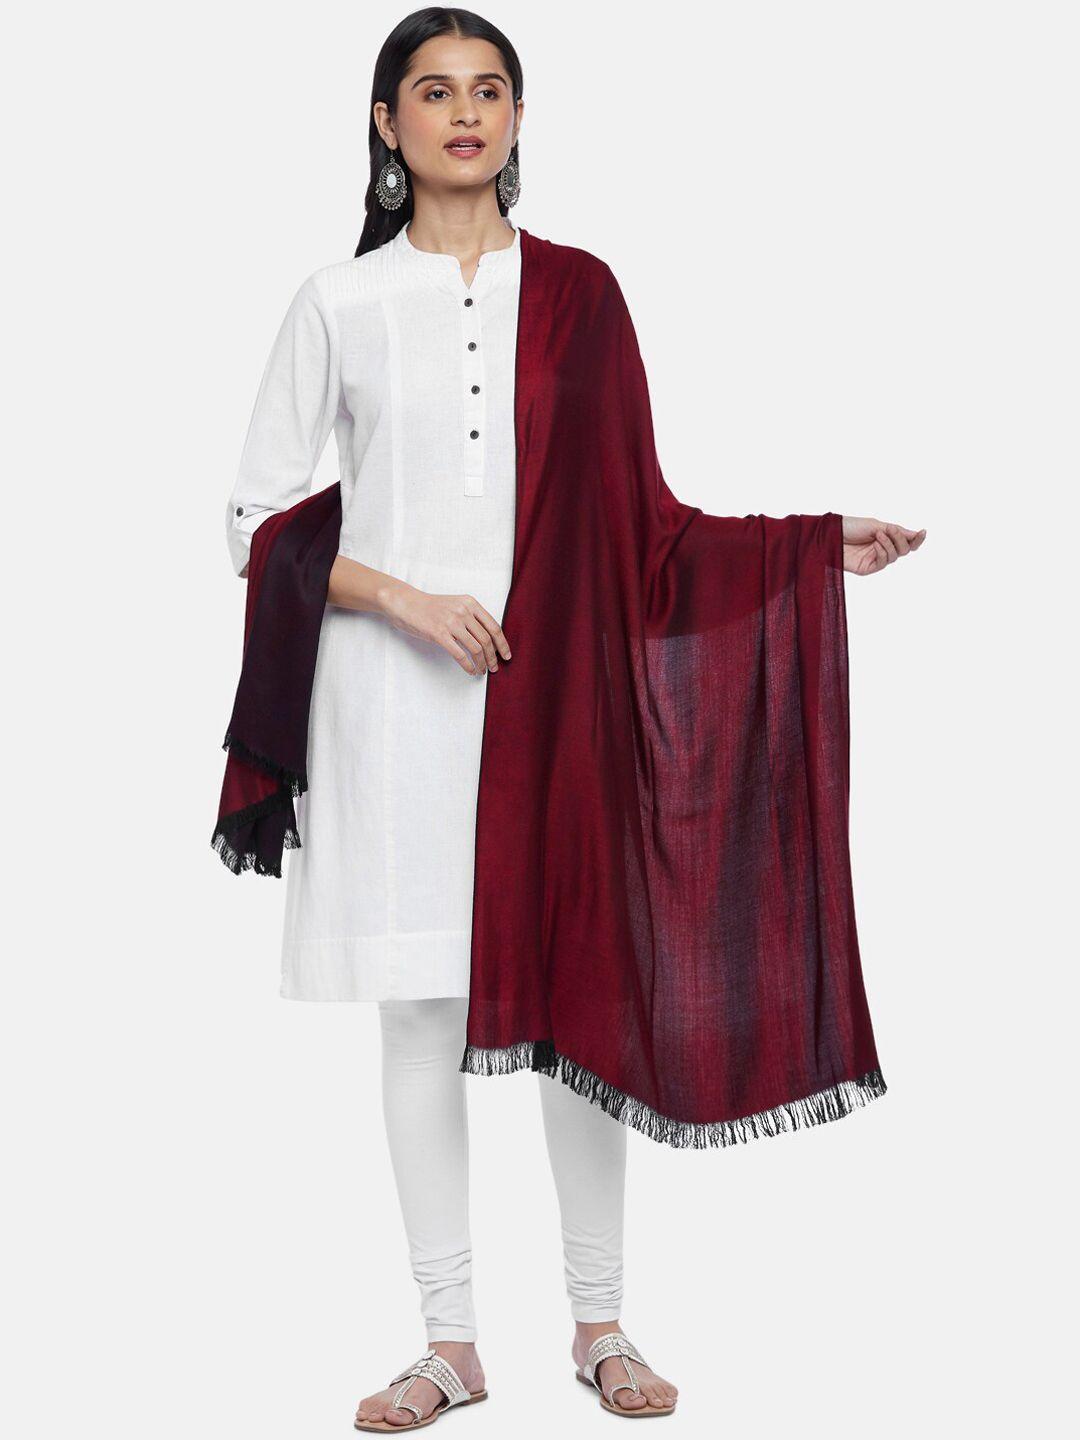 rangmanch by pantaloons women maroon solid pure acrylic shawl